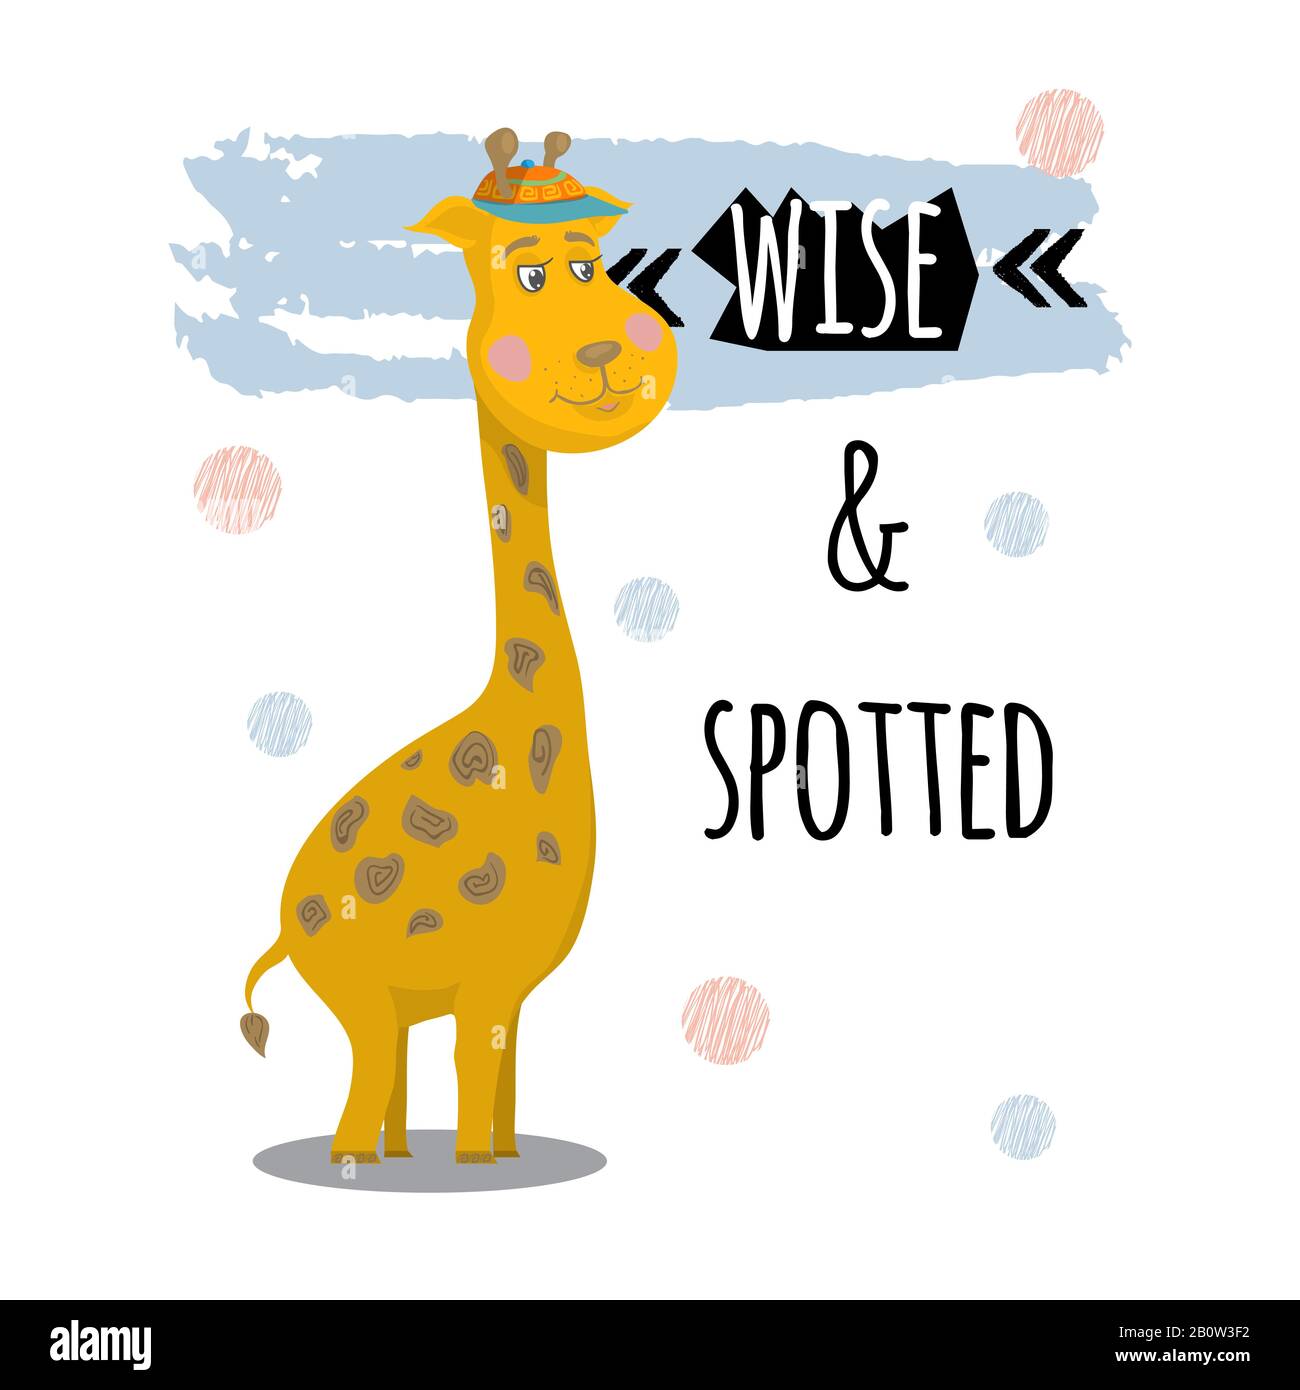 funny giraffe captions